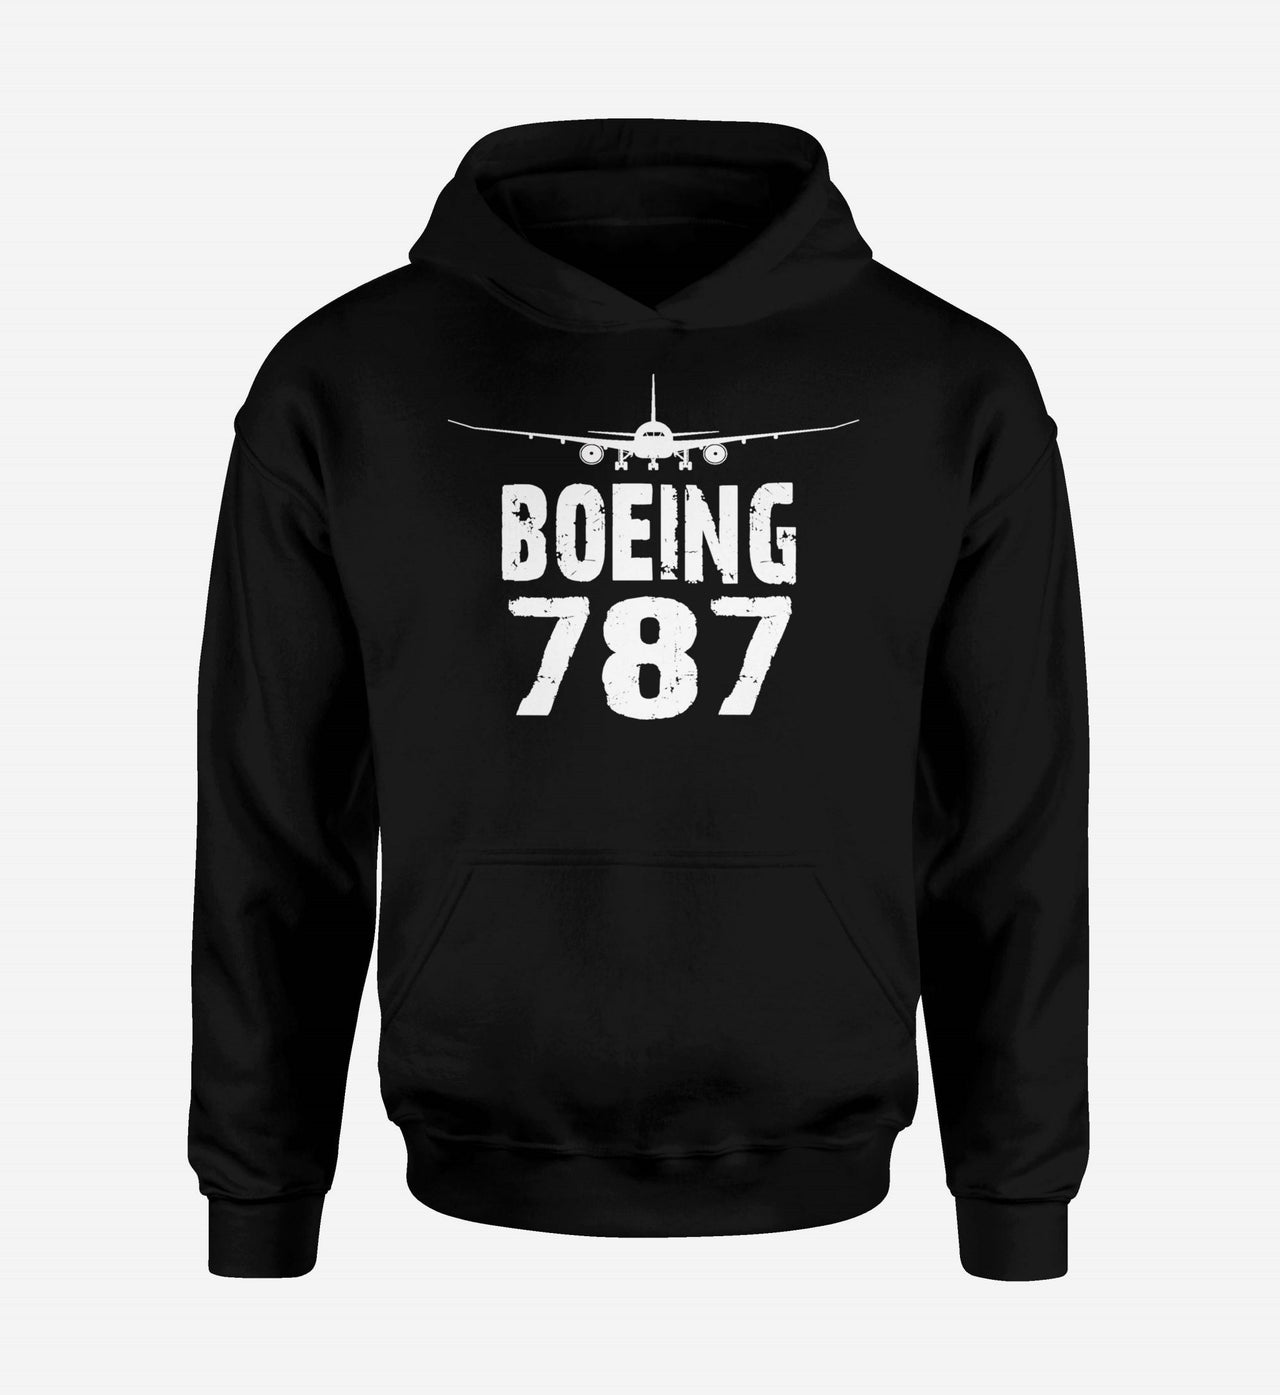 Boeing 787 & Plane Designed Hoodies